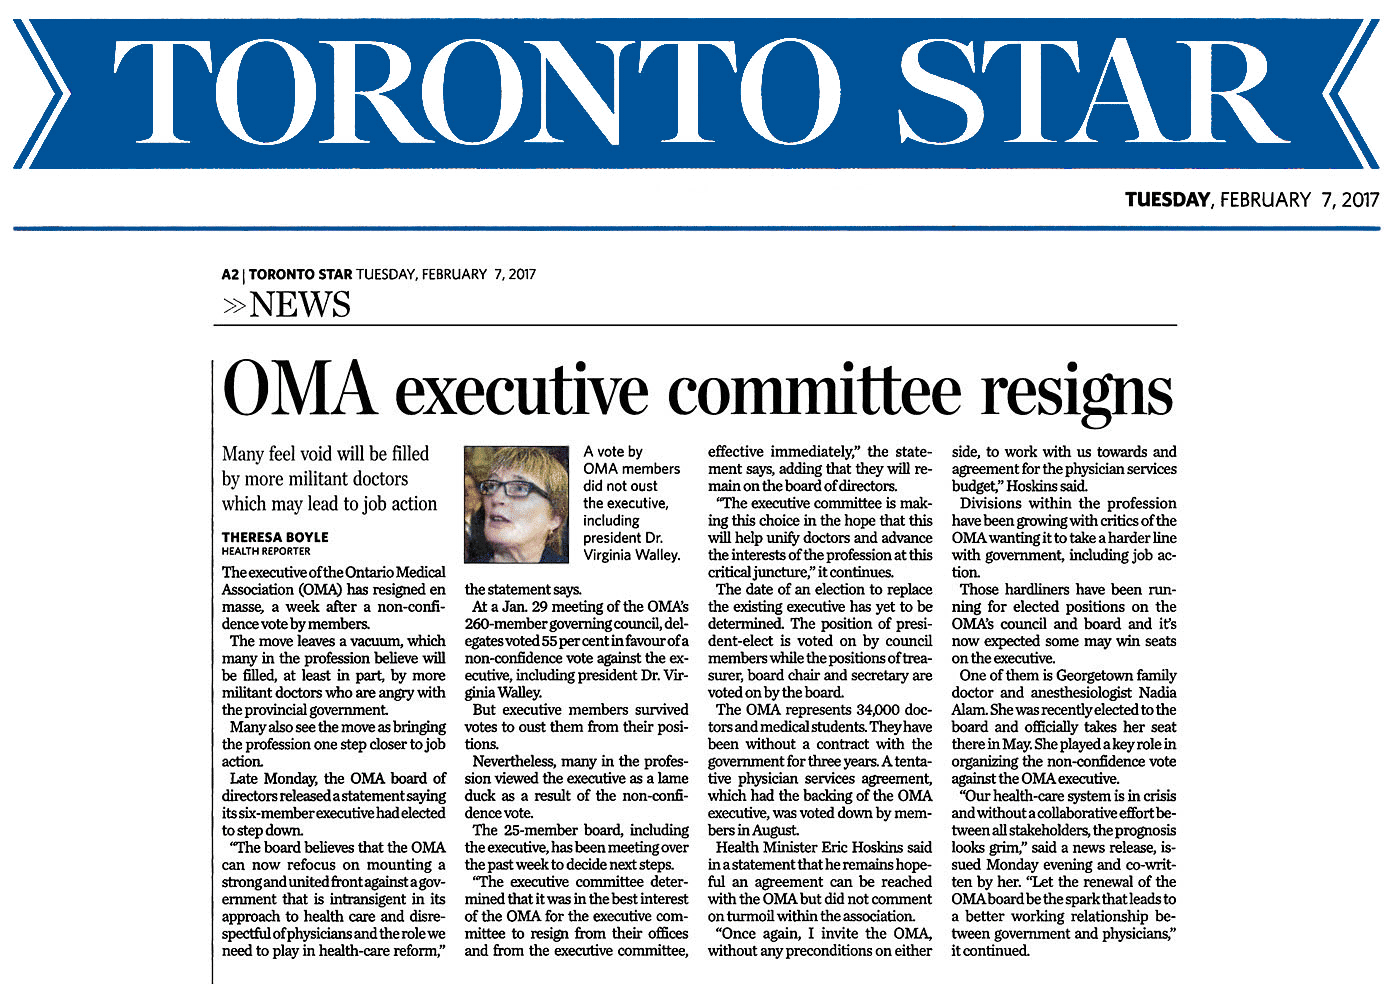 Toronto Star 2017-02-07 - OMA exec resigns